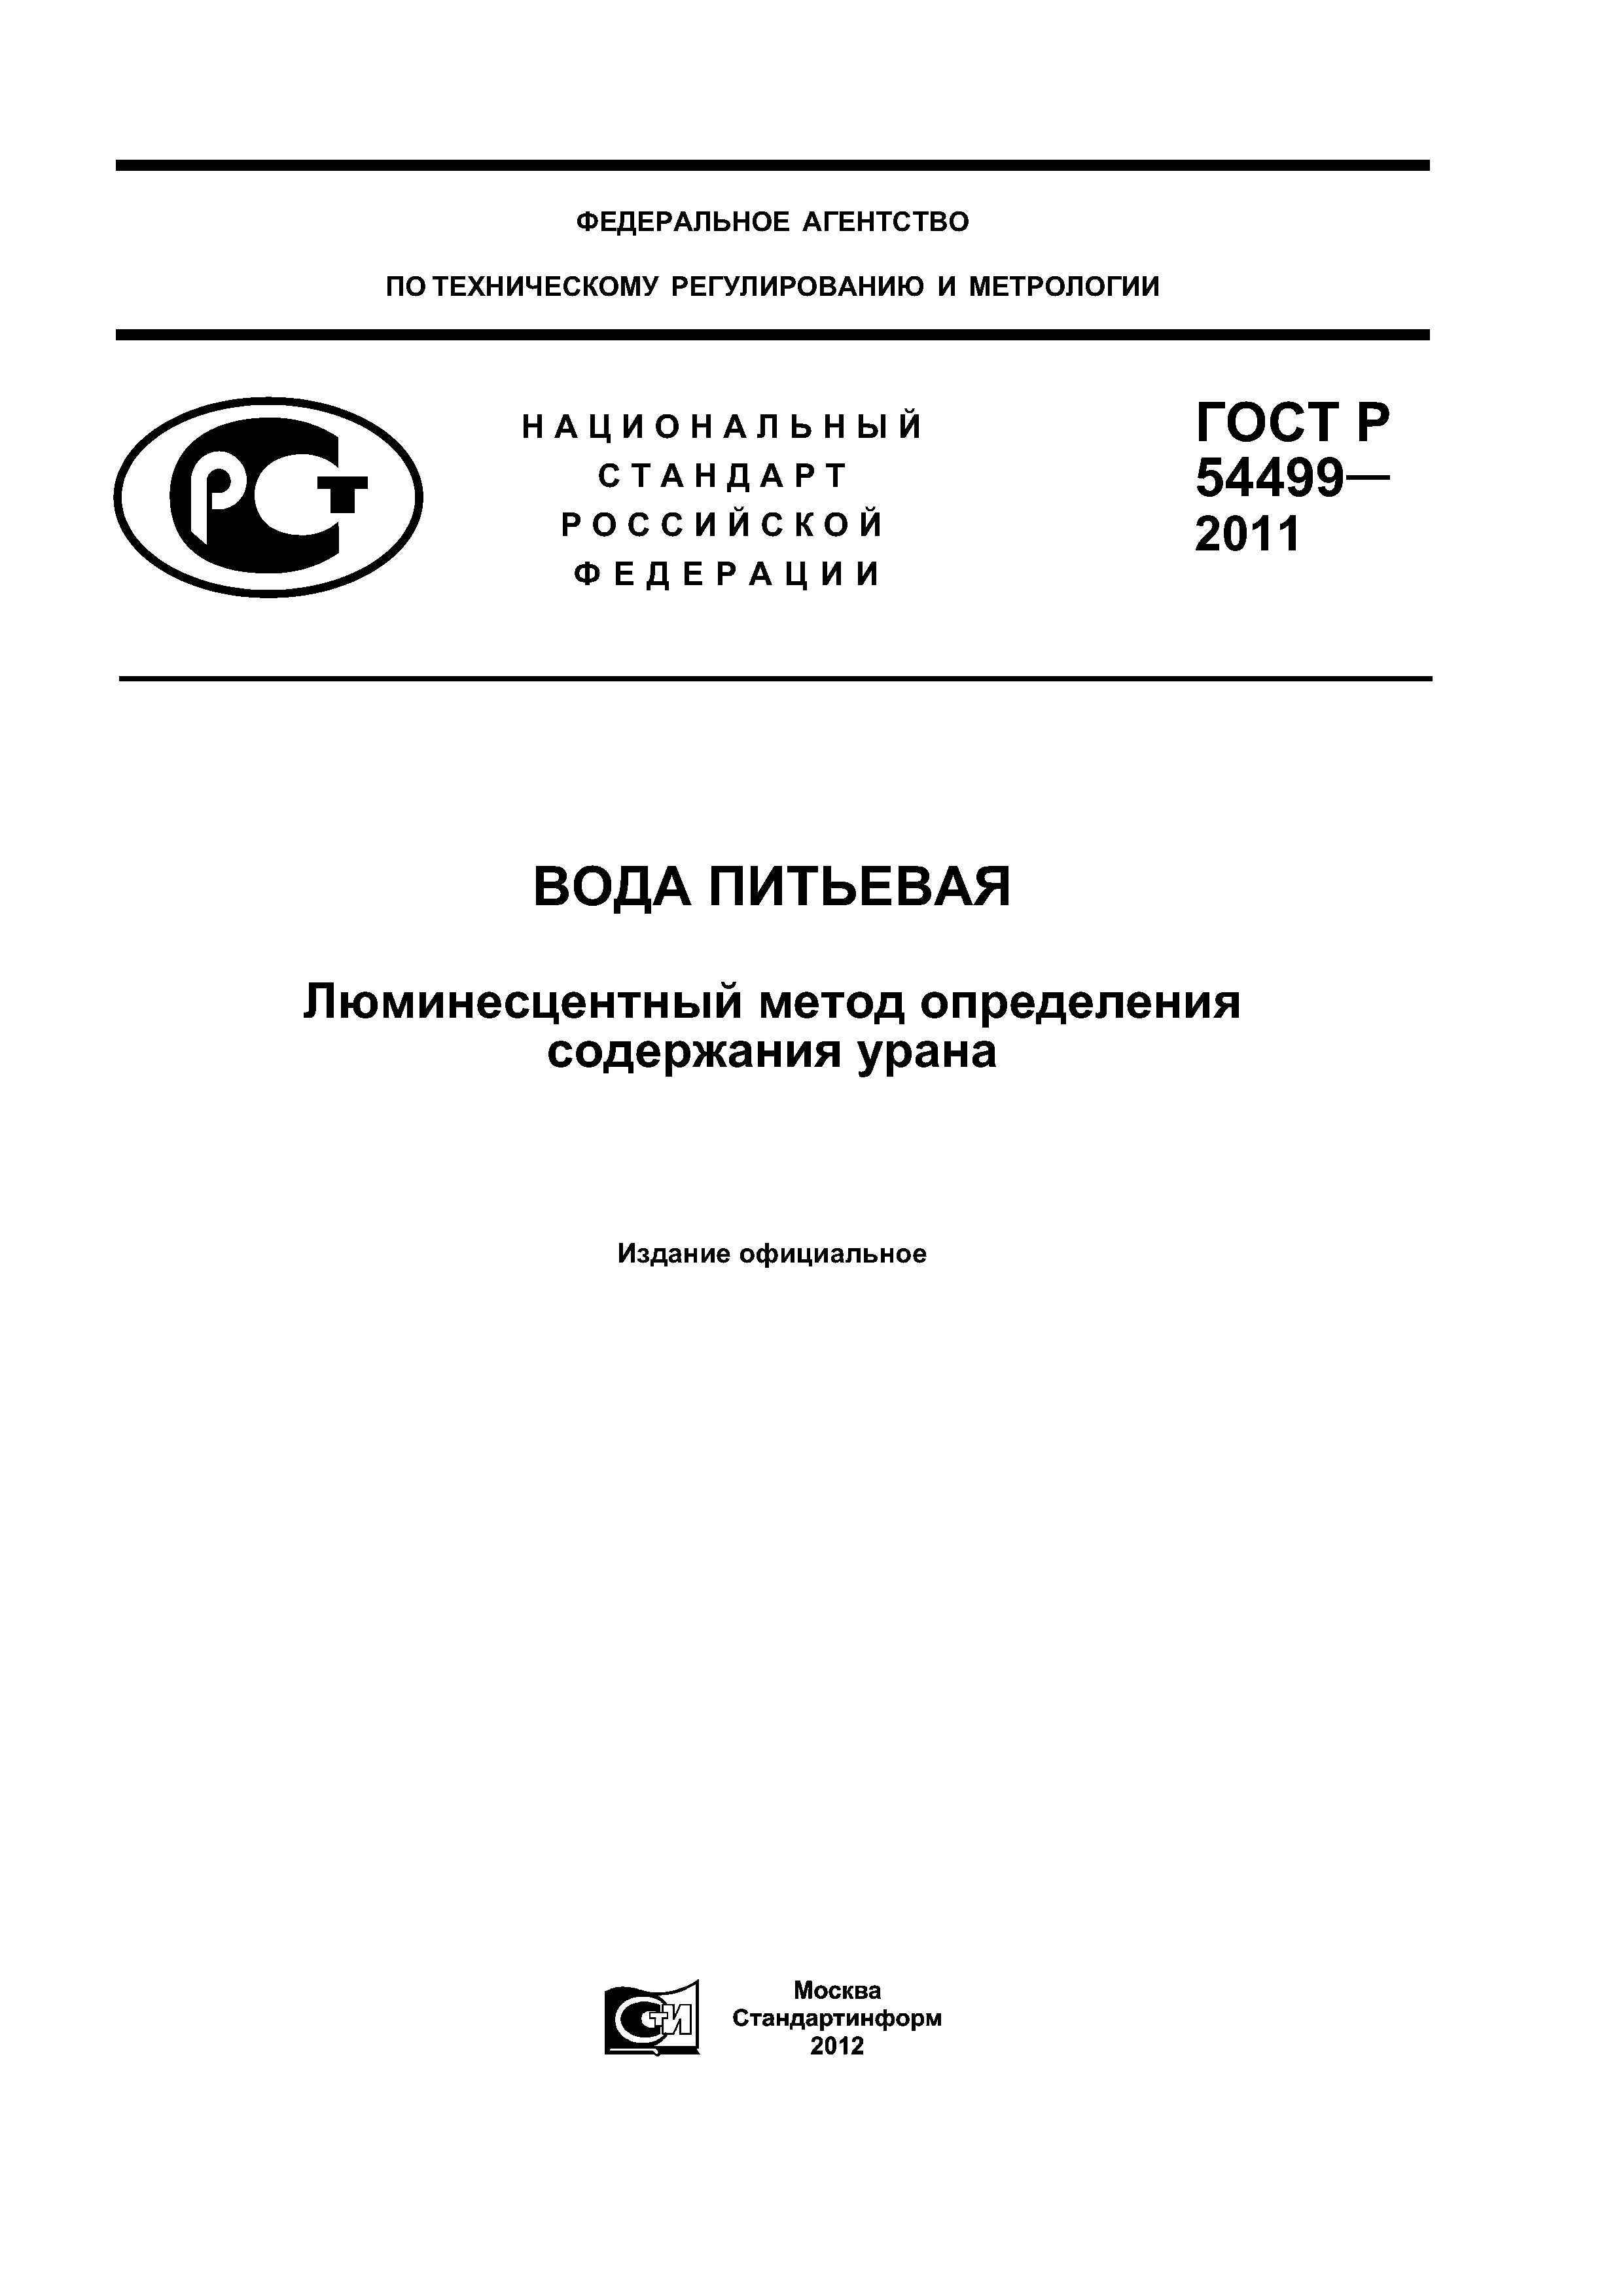 ГОСТ Р 54499-2011